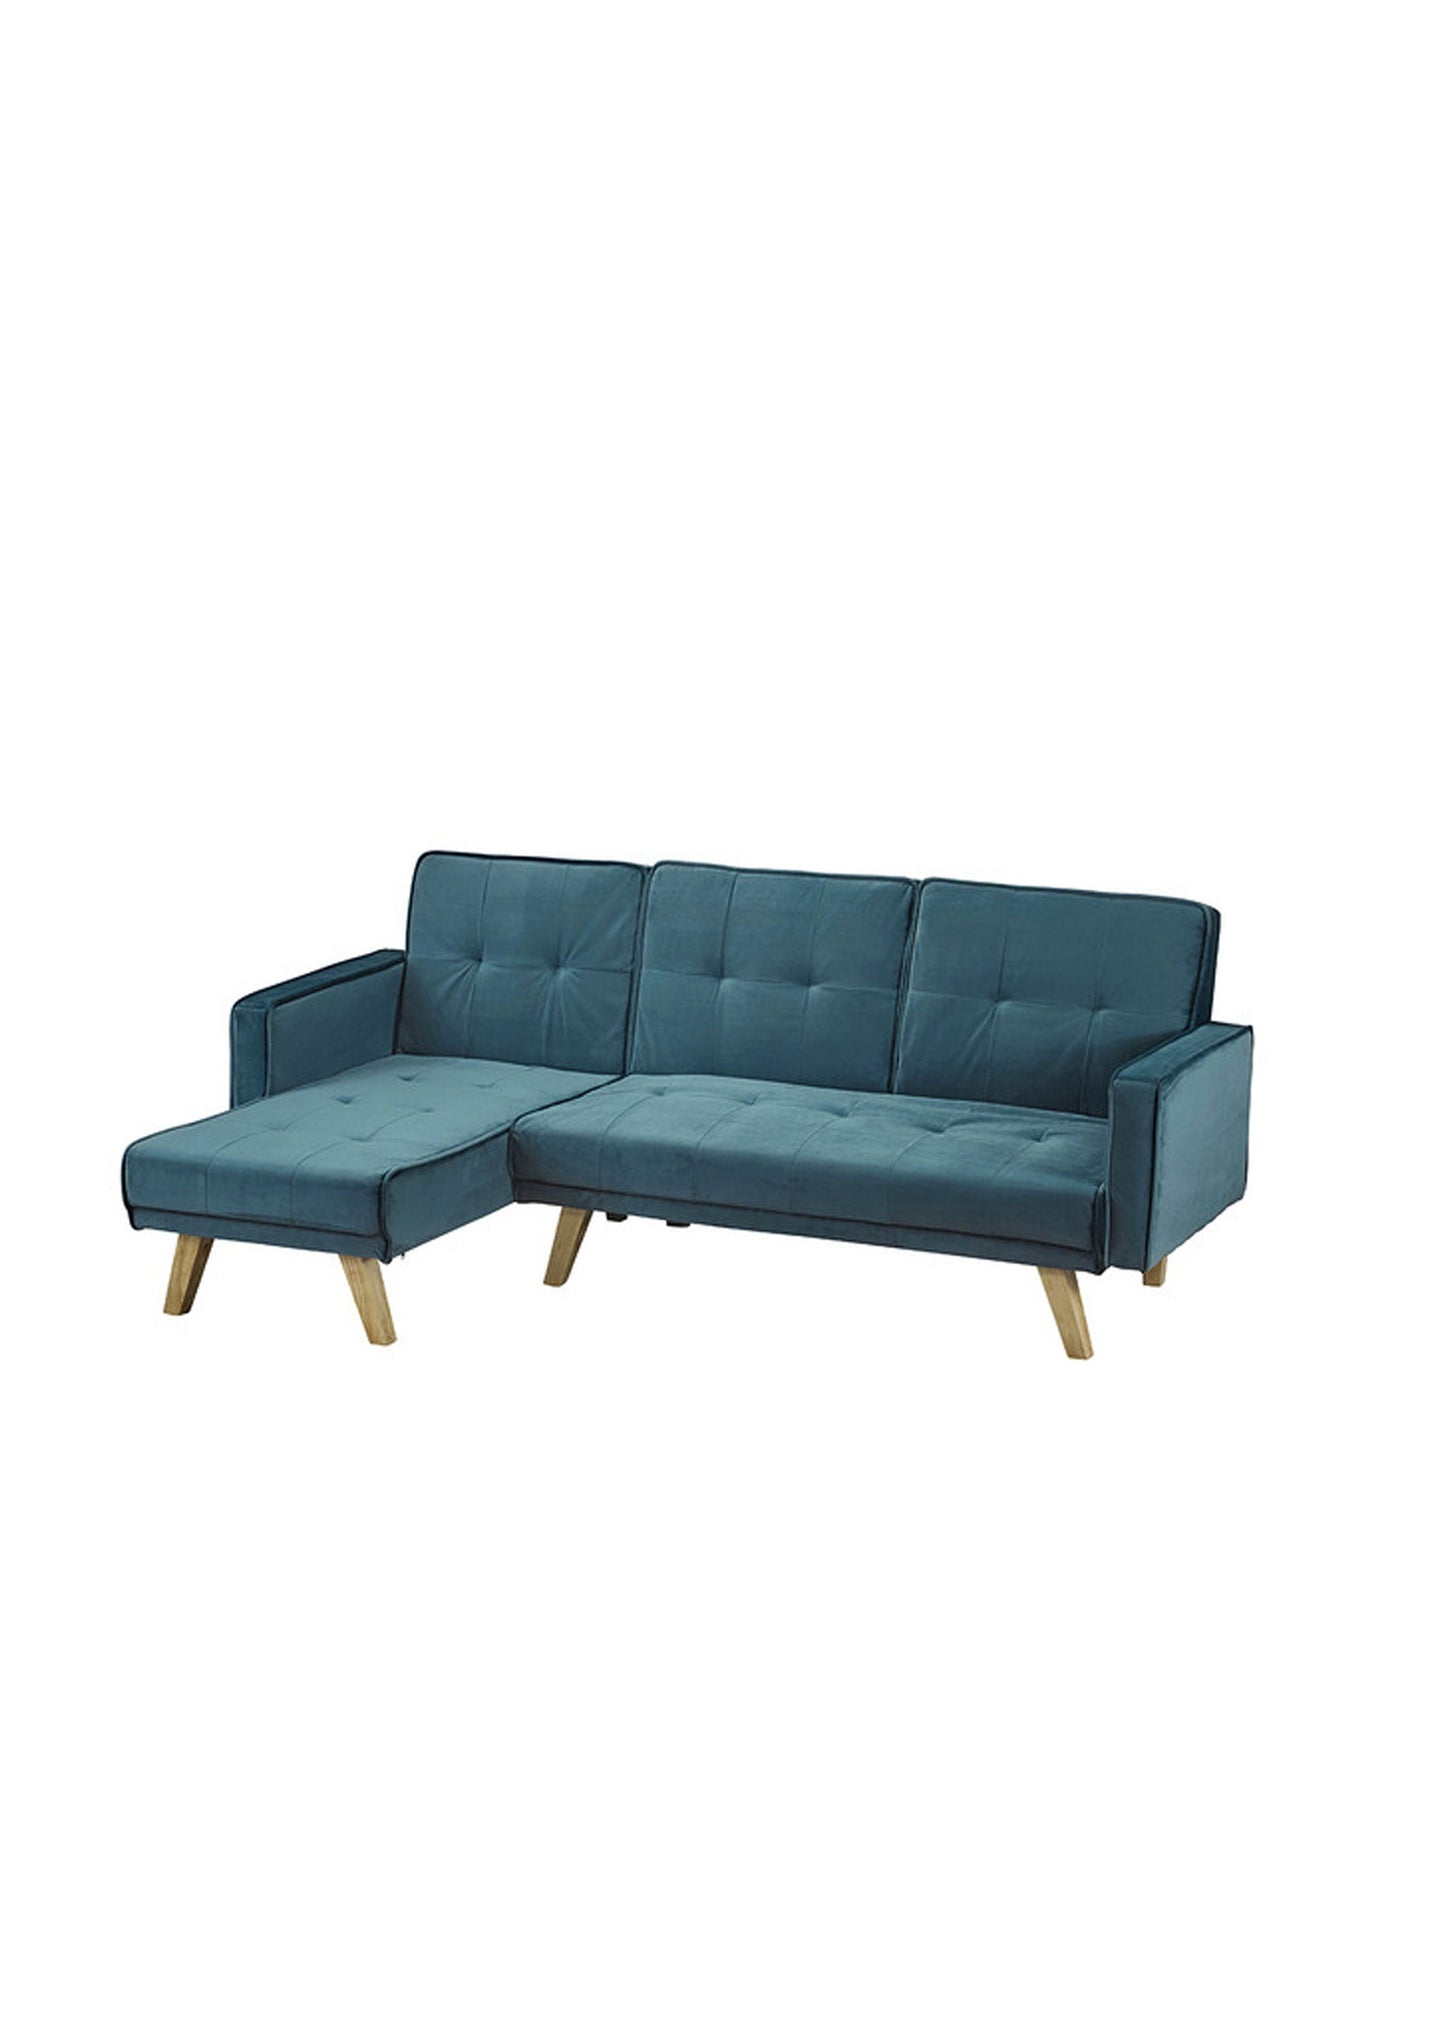 Three Seater Corner Sofa Bed in Teal Velvet Scandi Style